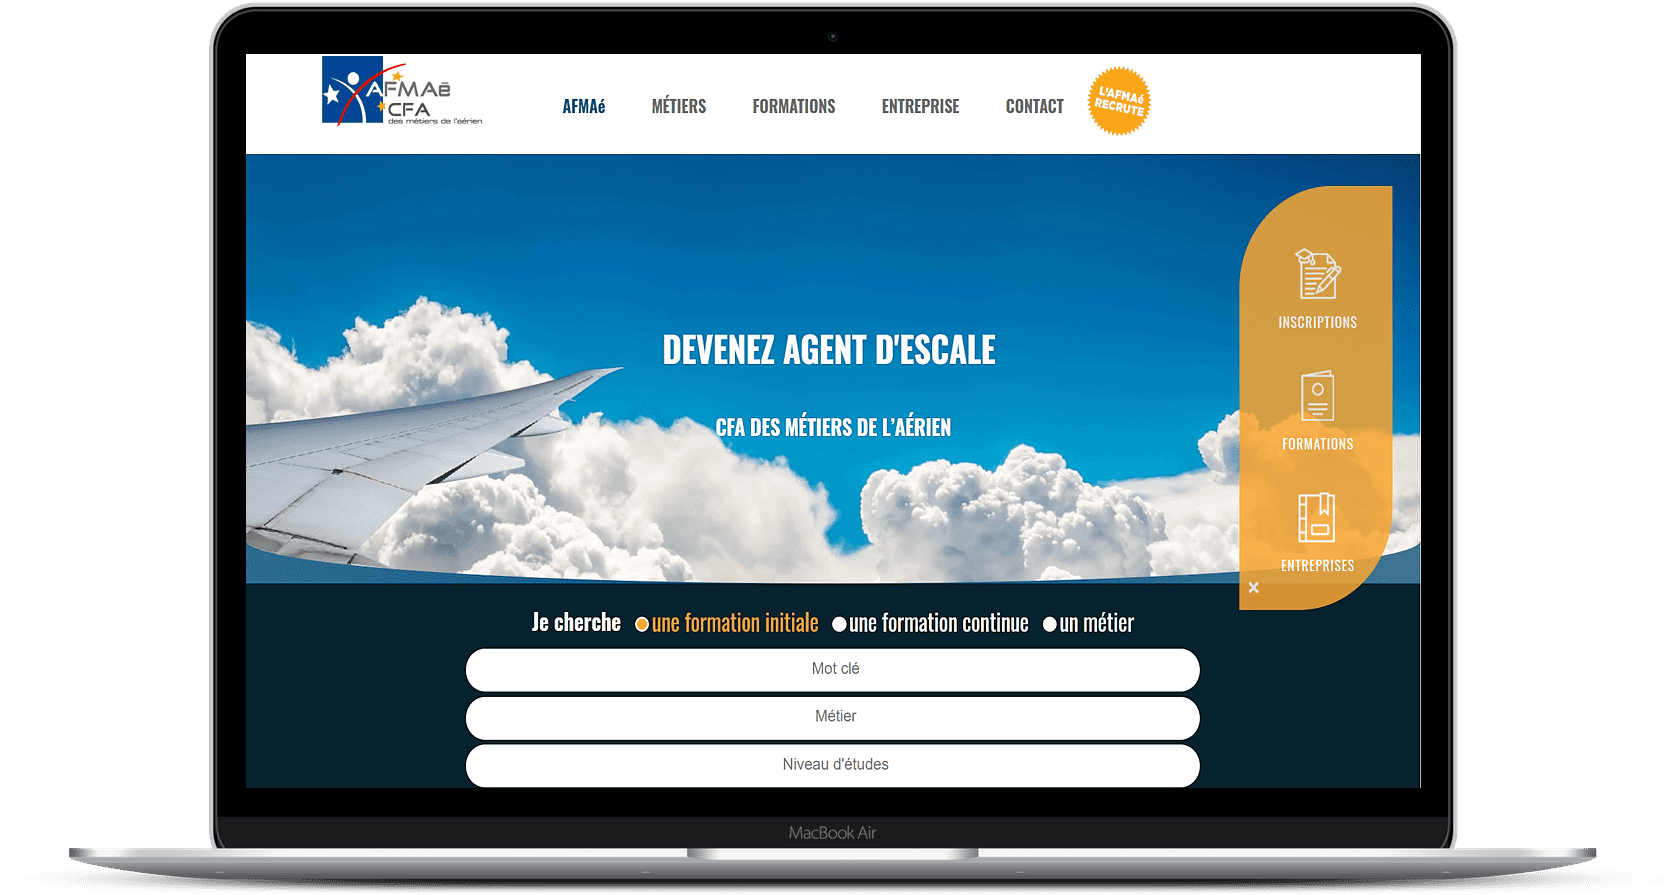 CFA AFMAe home page